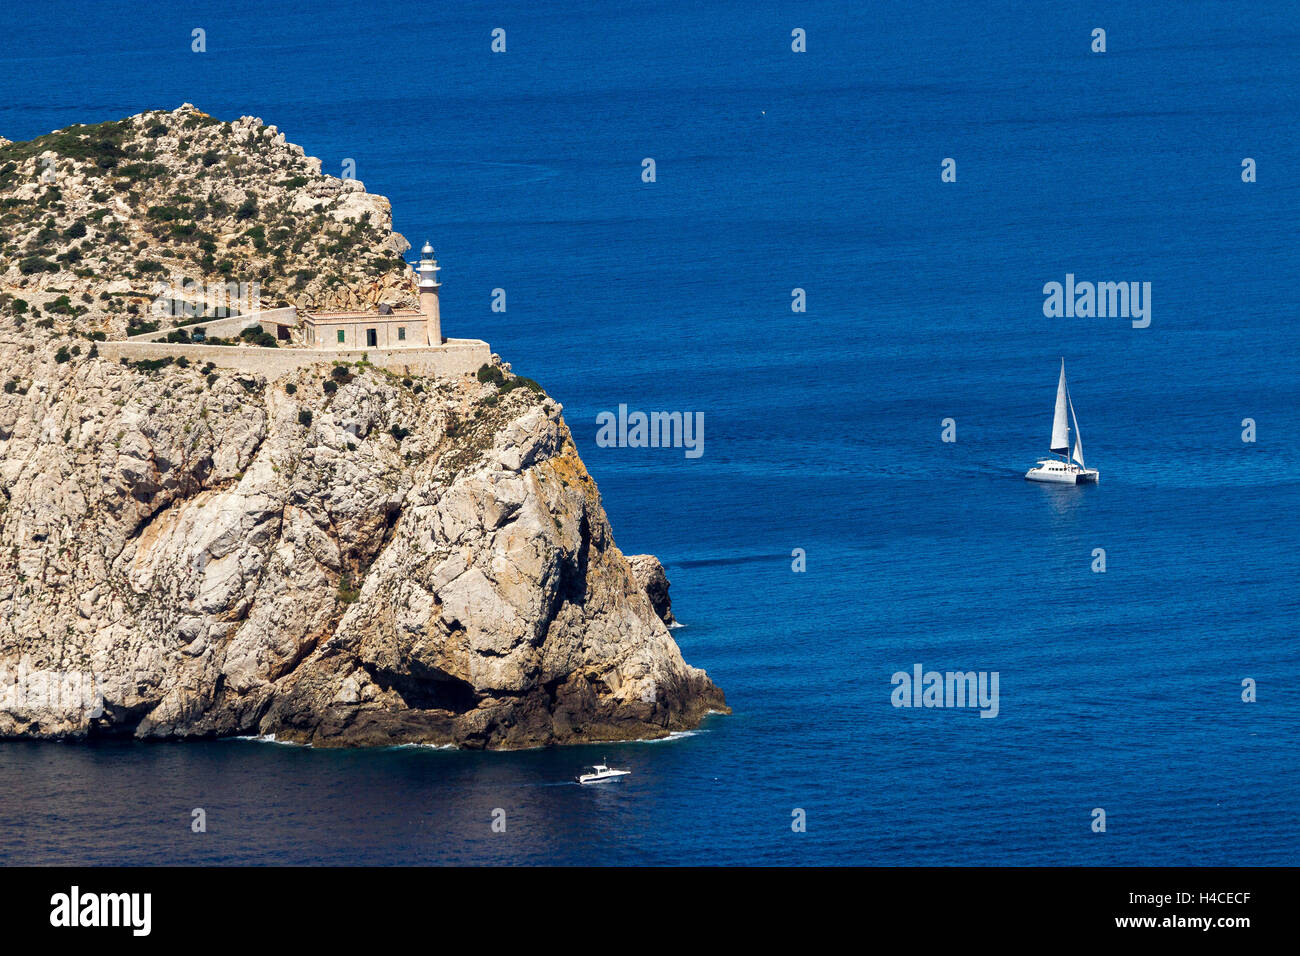 Lighthouse on the north point the island Sat. Dragonera, close Majorca, the Balearic Islands, Spain, Europe Stock Photo